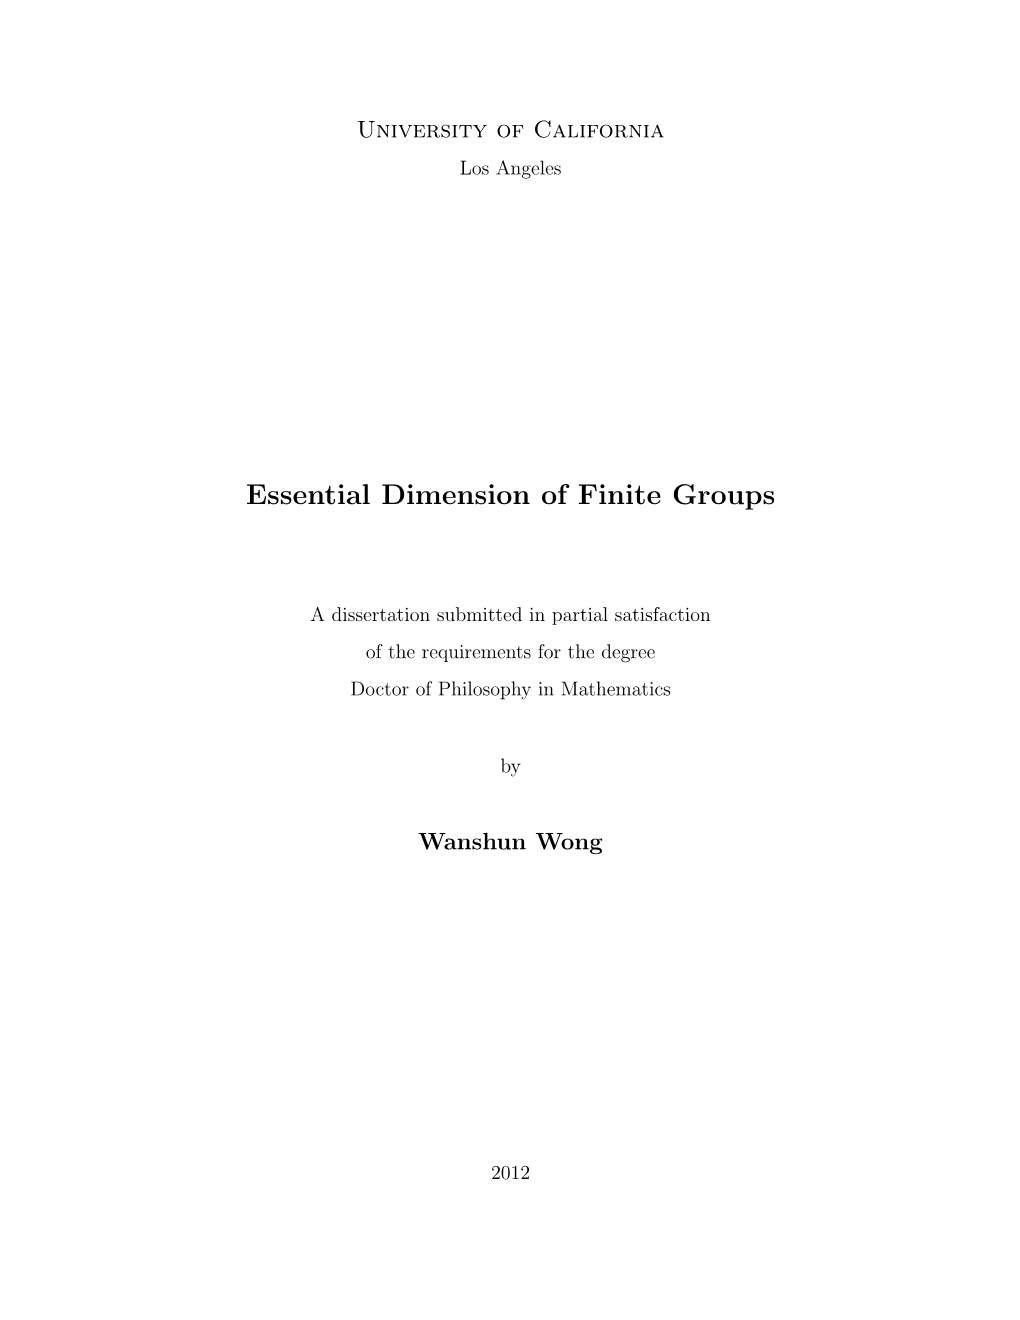 Essential Dimension of Finite Groups